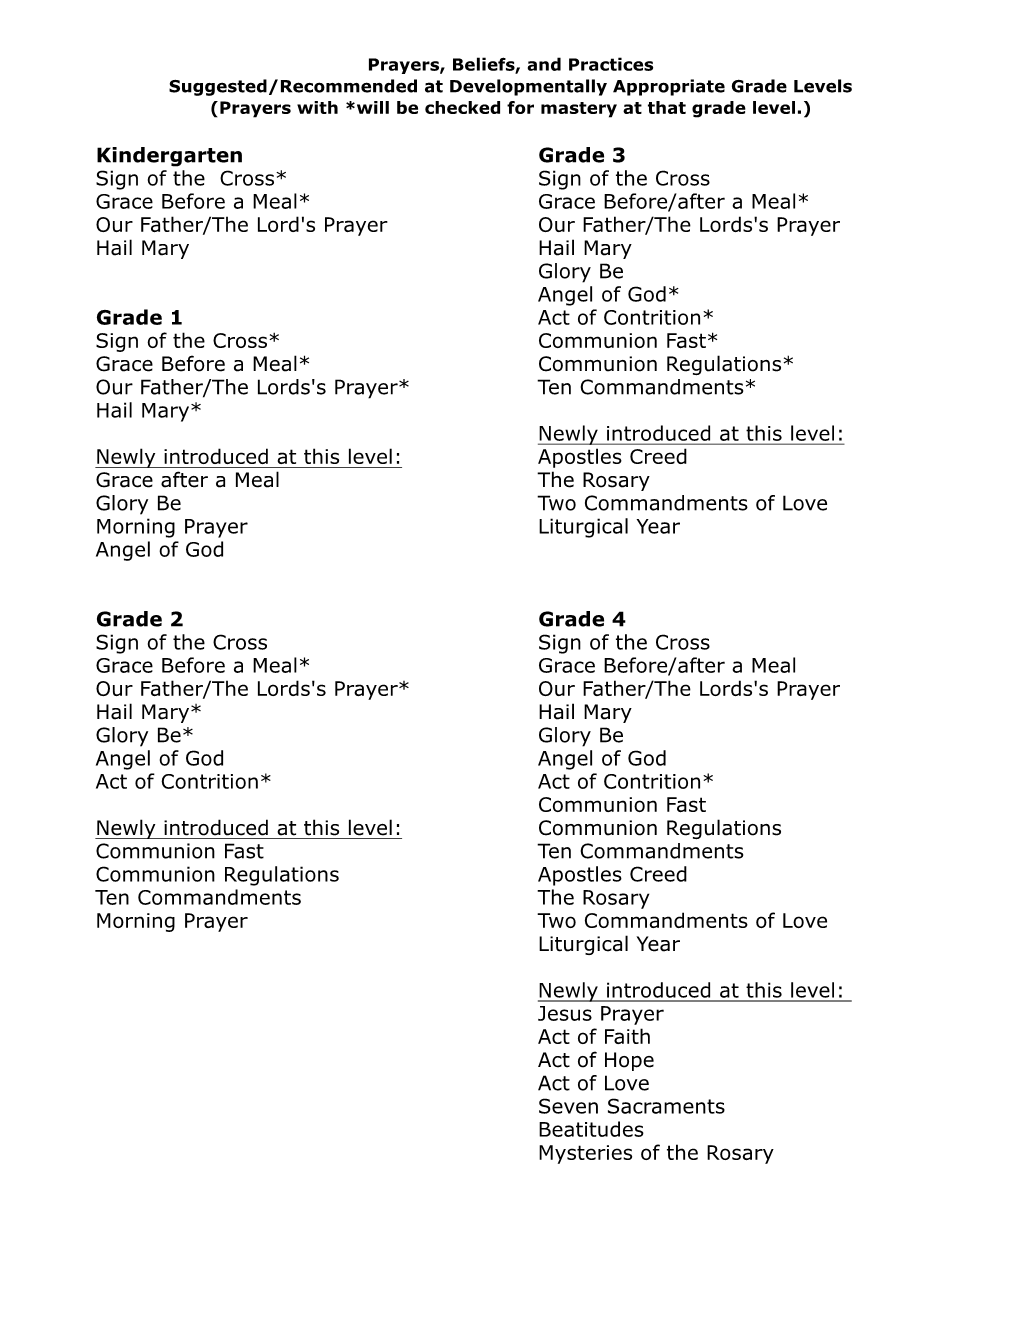 K-8 Prayer List